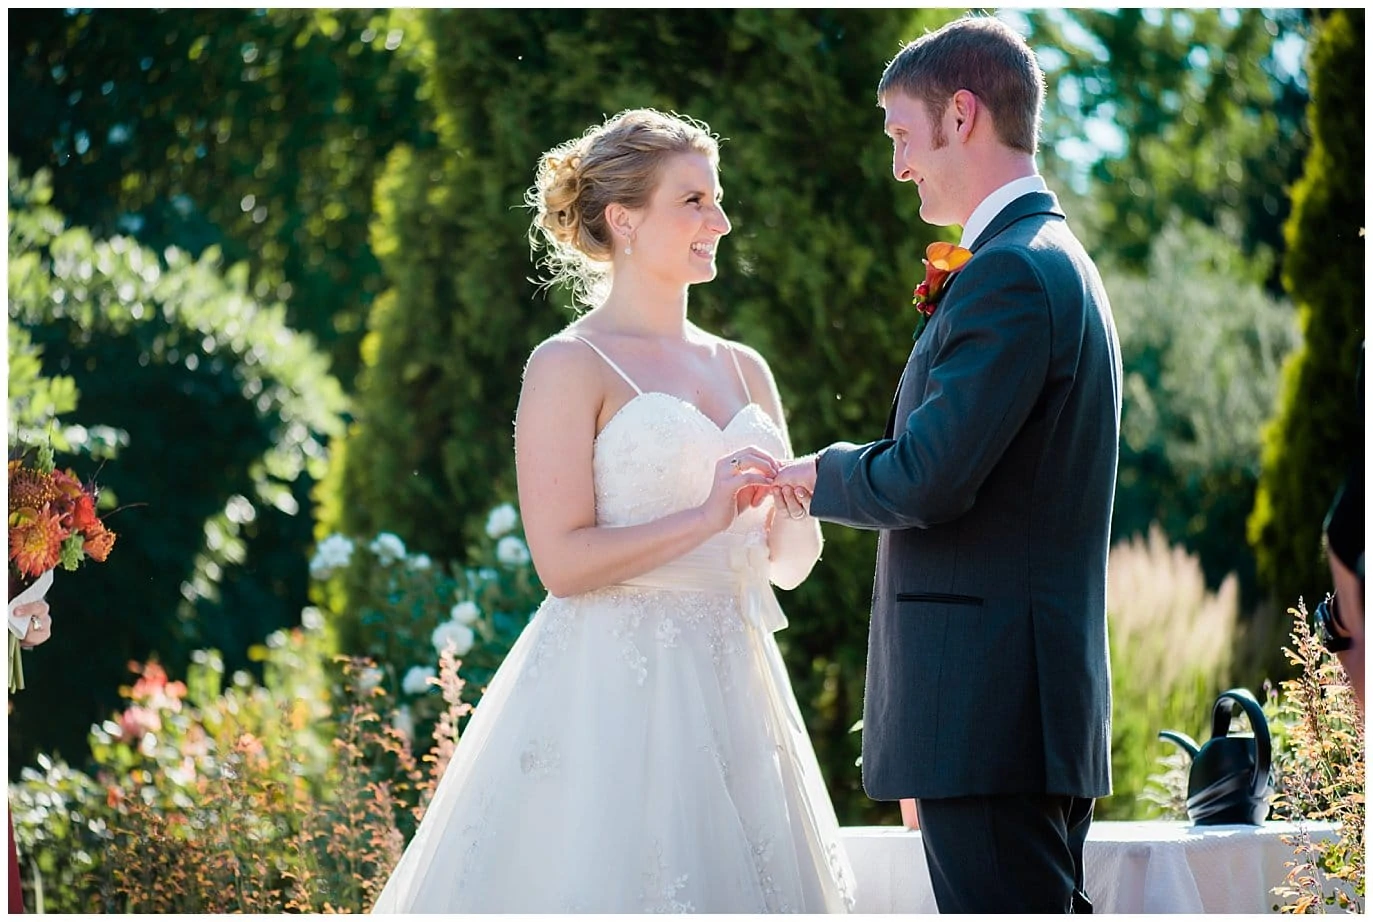 ring exchange in Romantic Gardens at Denver Botanic Gardens wedding by Denver wedding photographer Jennie Crate